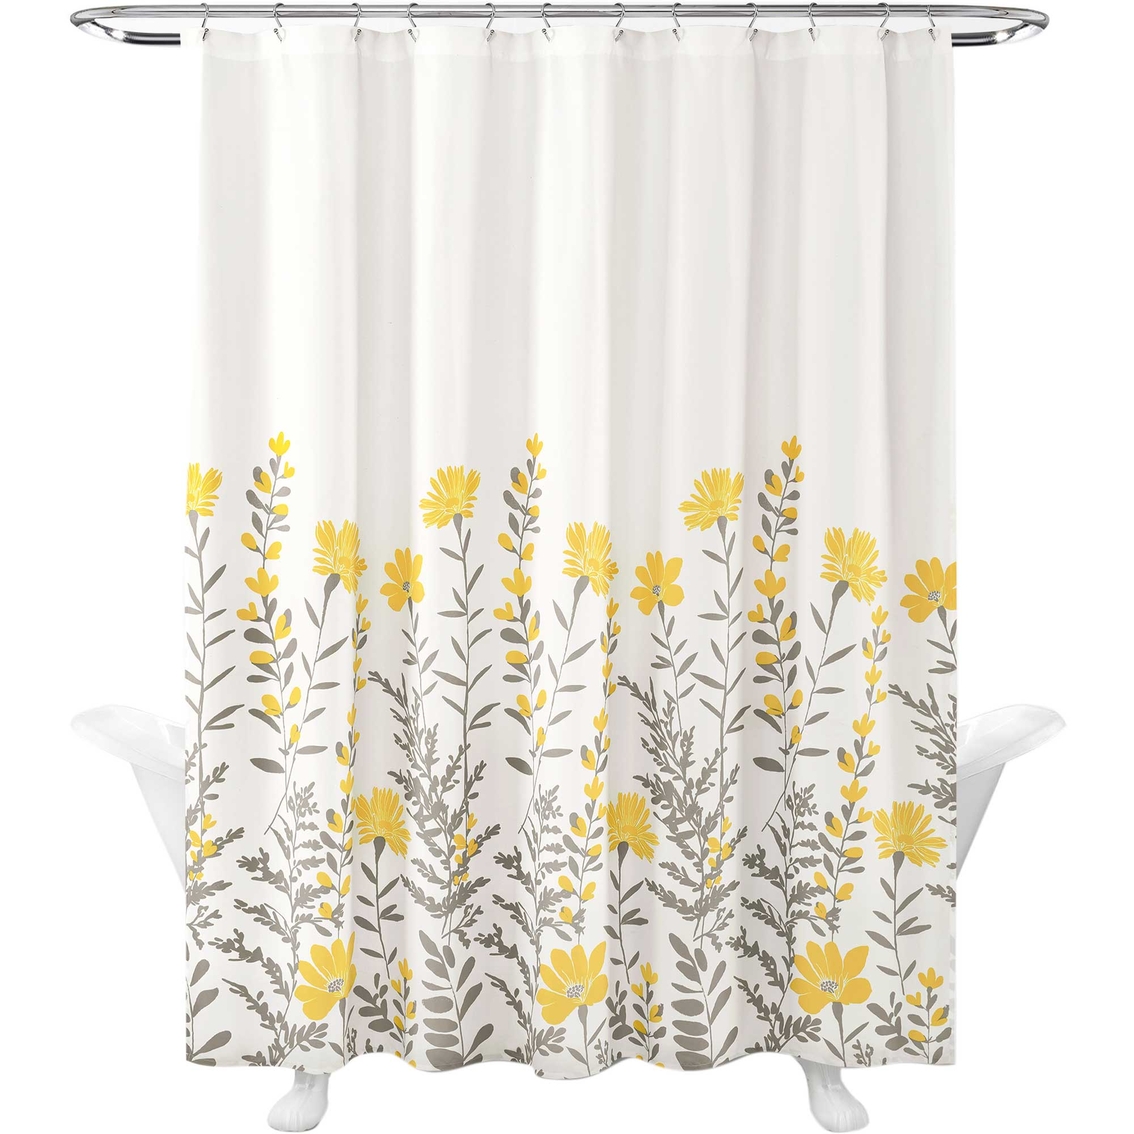 Lush Decor Aprile Shower Curtain 72 x 72 - Image 2 of 4